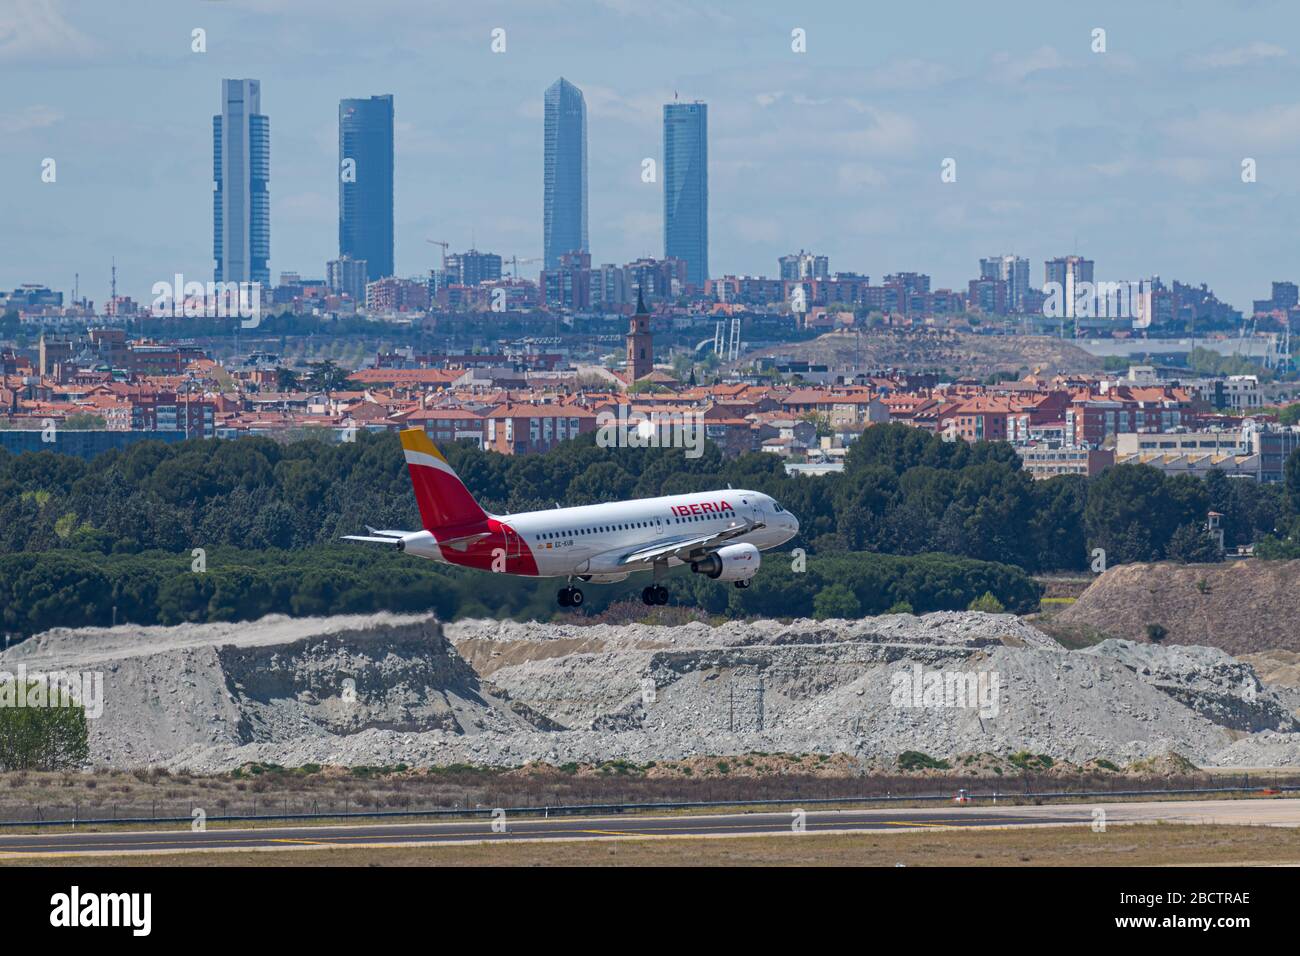 MADRID, SPAIN - APRIL 14, 2019: Iberia Airlines Airbus A319 passenger plane landing at Madrid-Barajas International Airport Adolfo Suarez In the backg Stock Photo